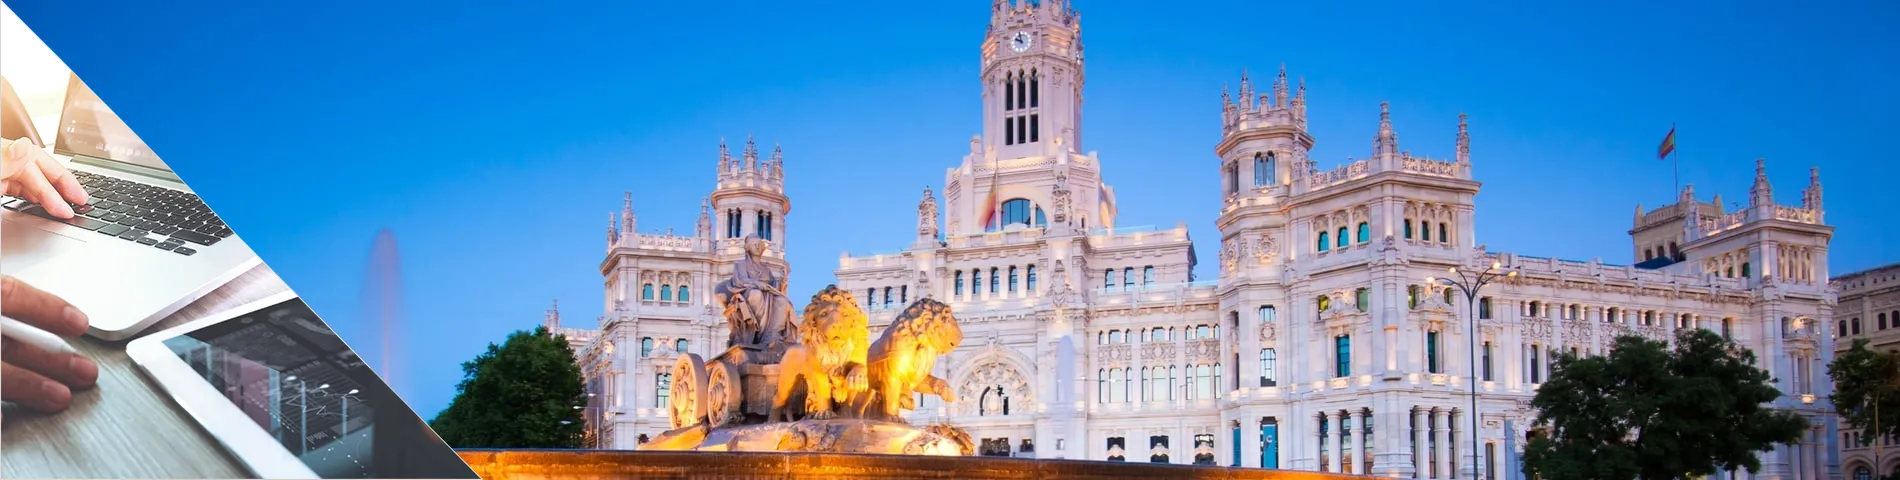 Madrid - İspanyolca & Dijital Medya